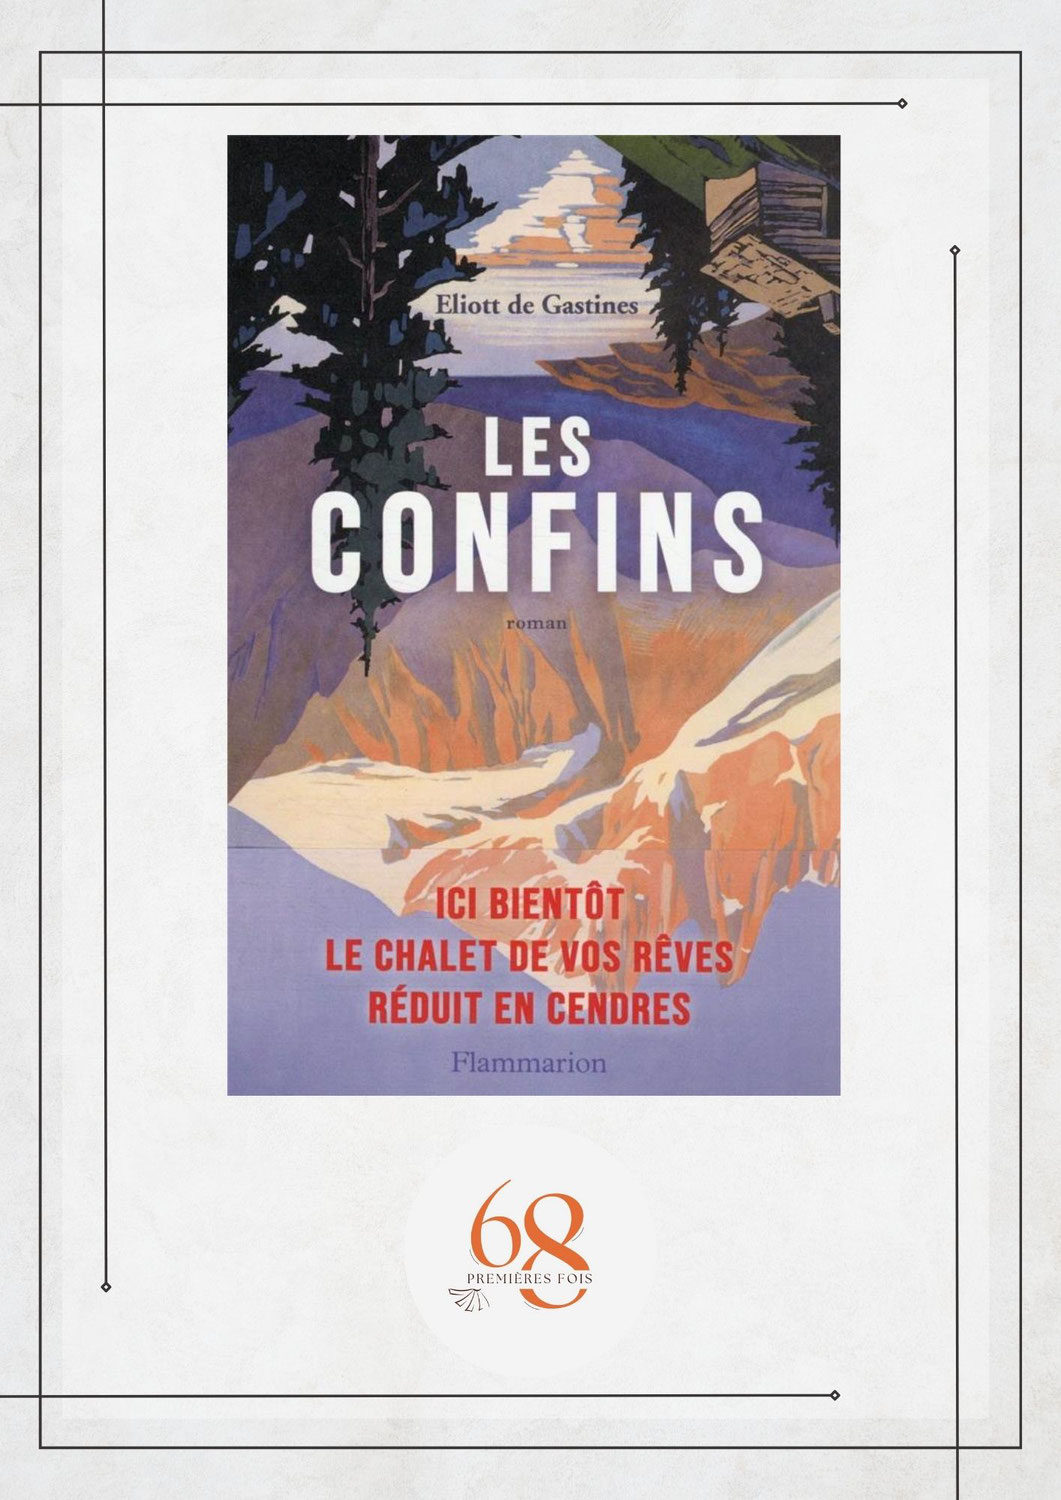 Les Confins, Eliott de Gastines, Flammarion